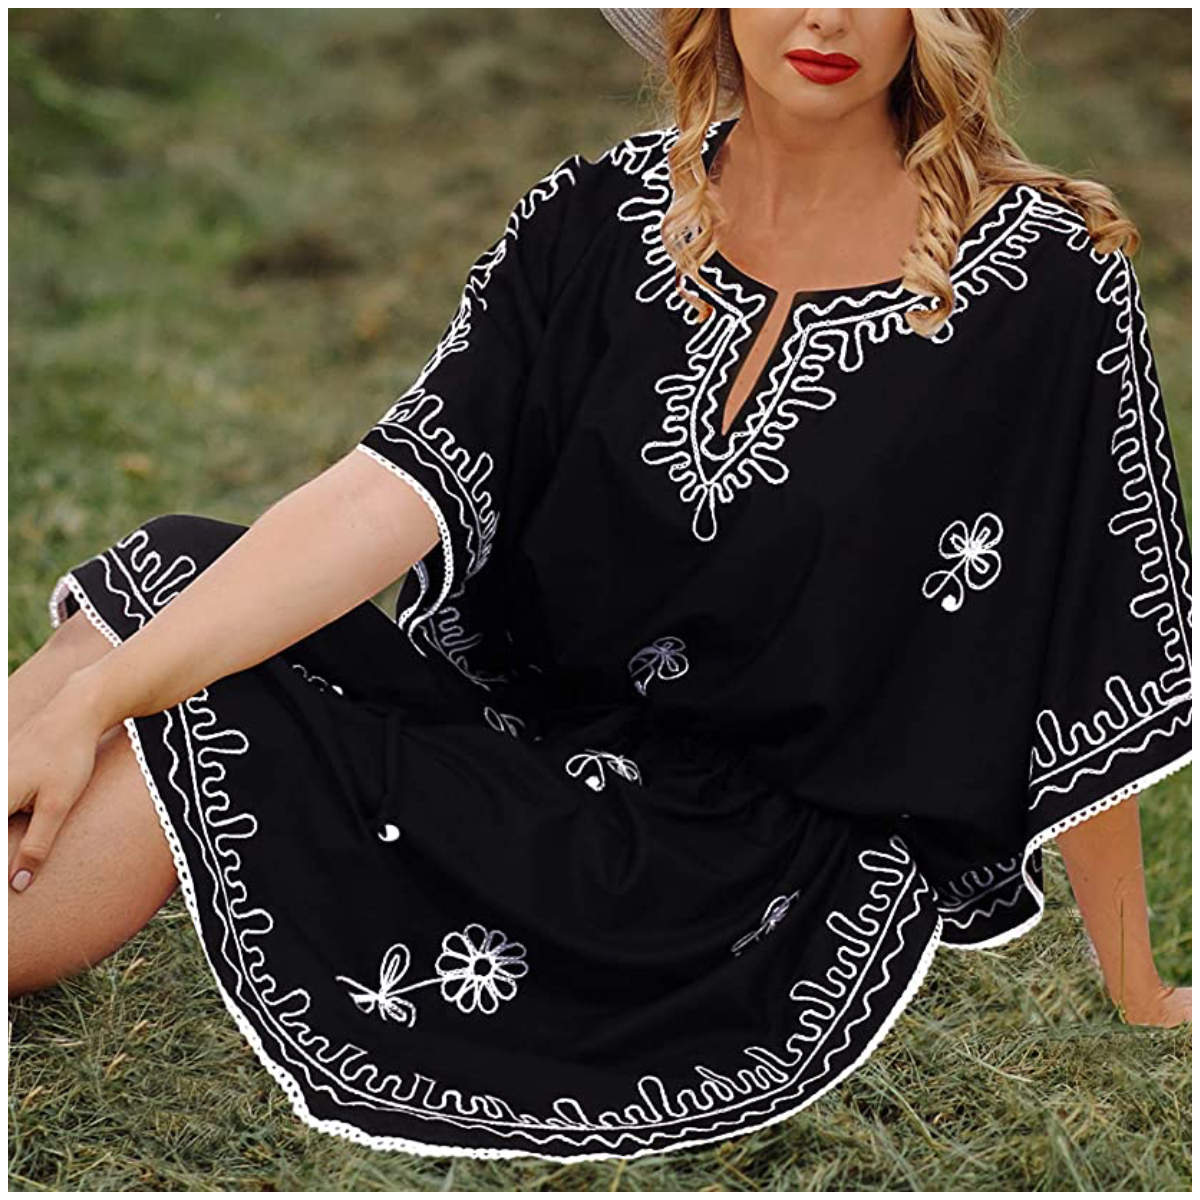 6 Short kaftan dresses for women who like to keep it breezy and stylish